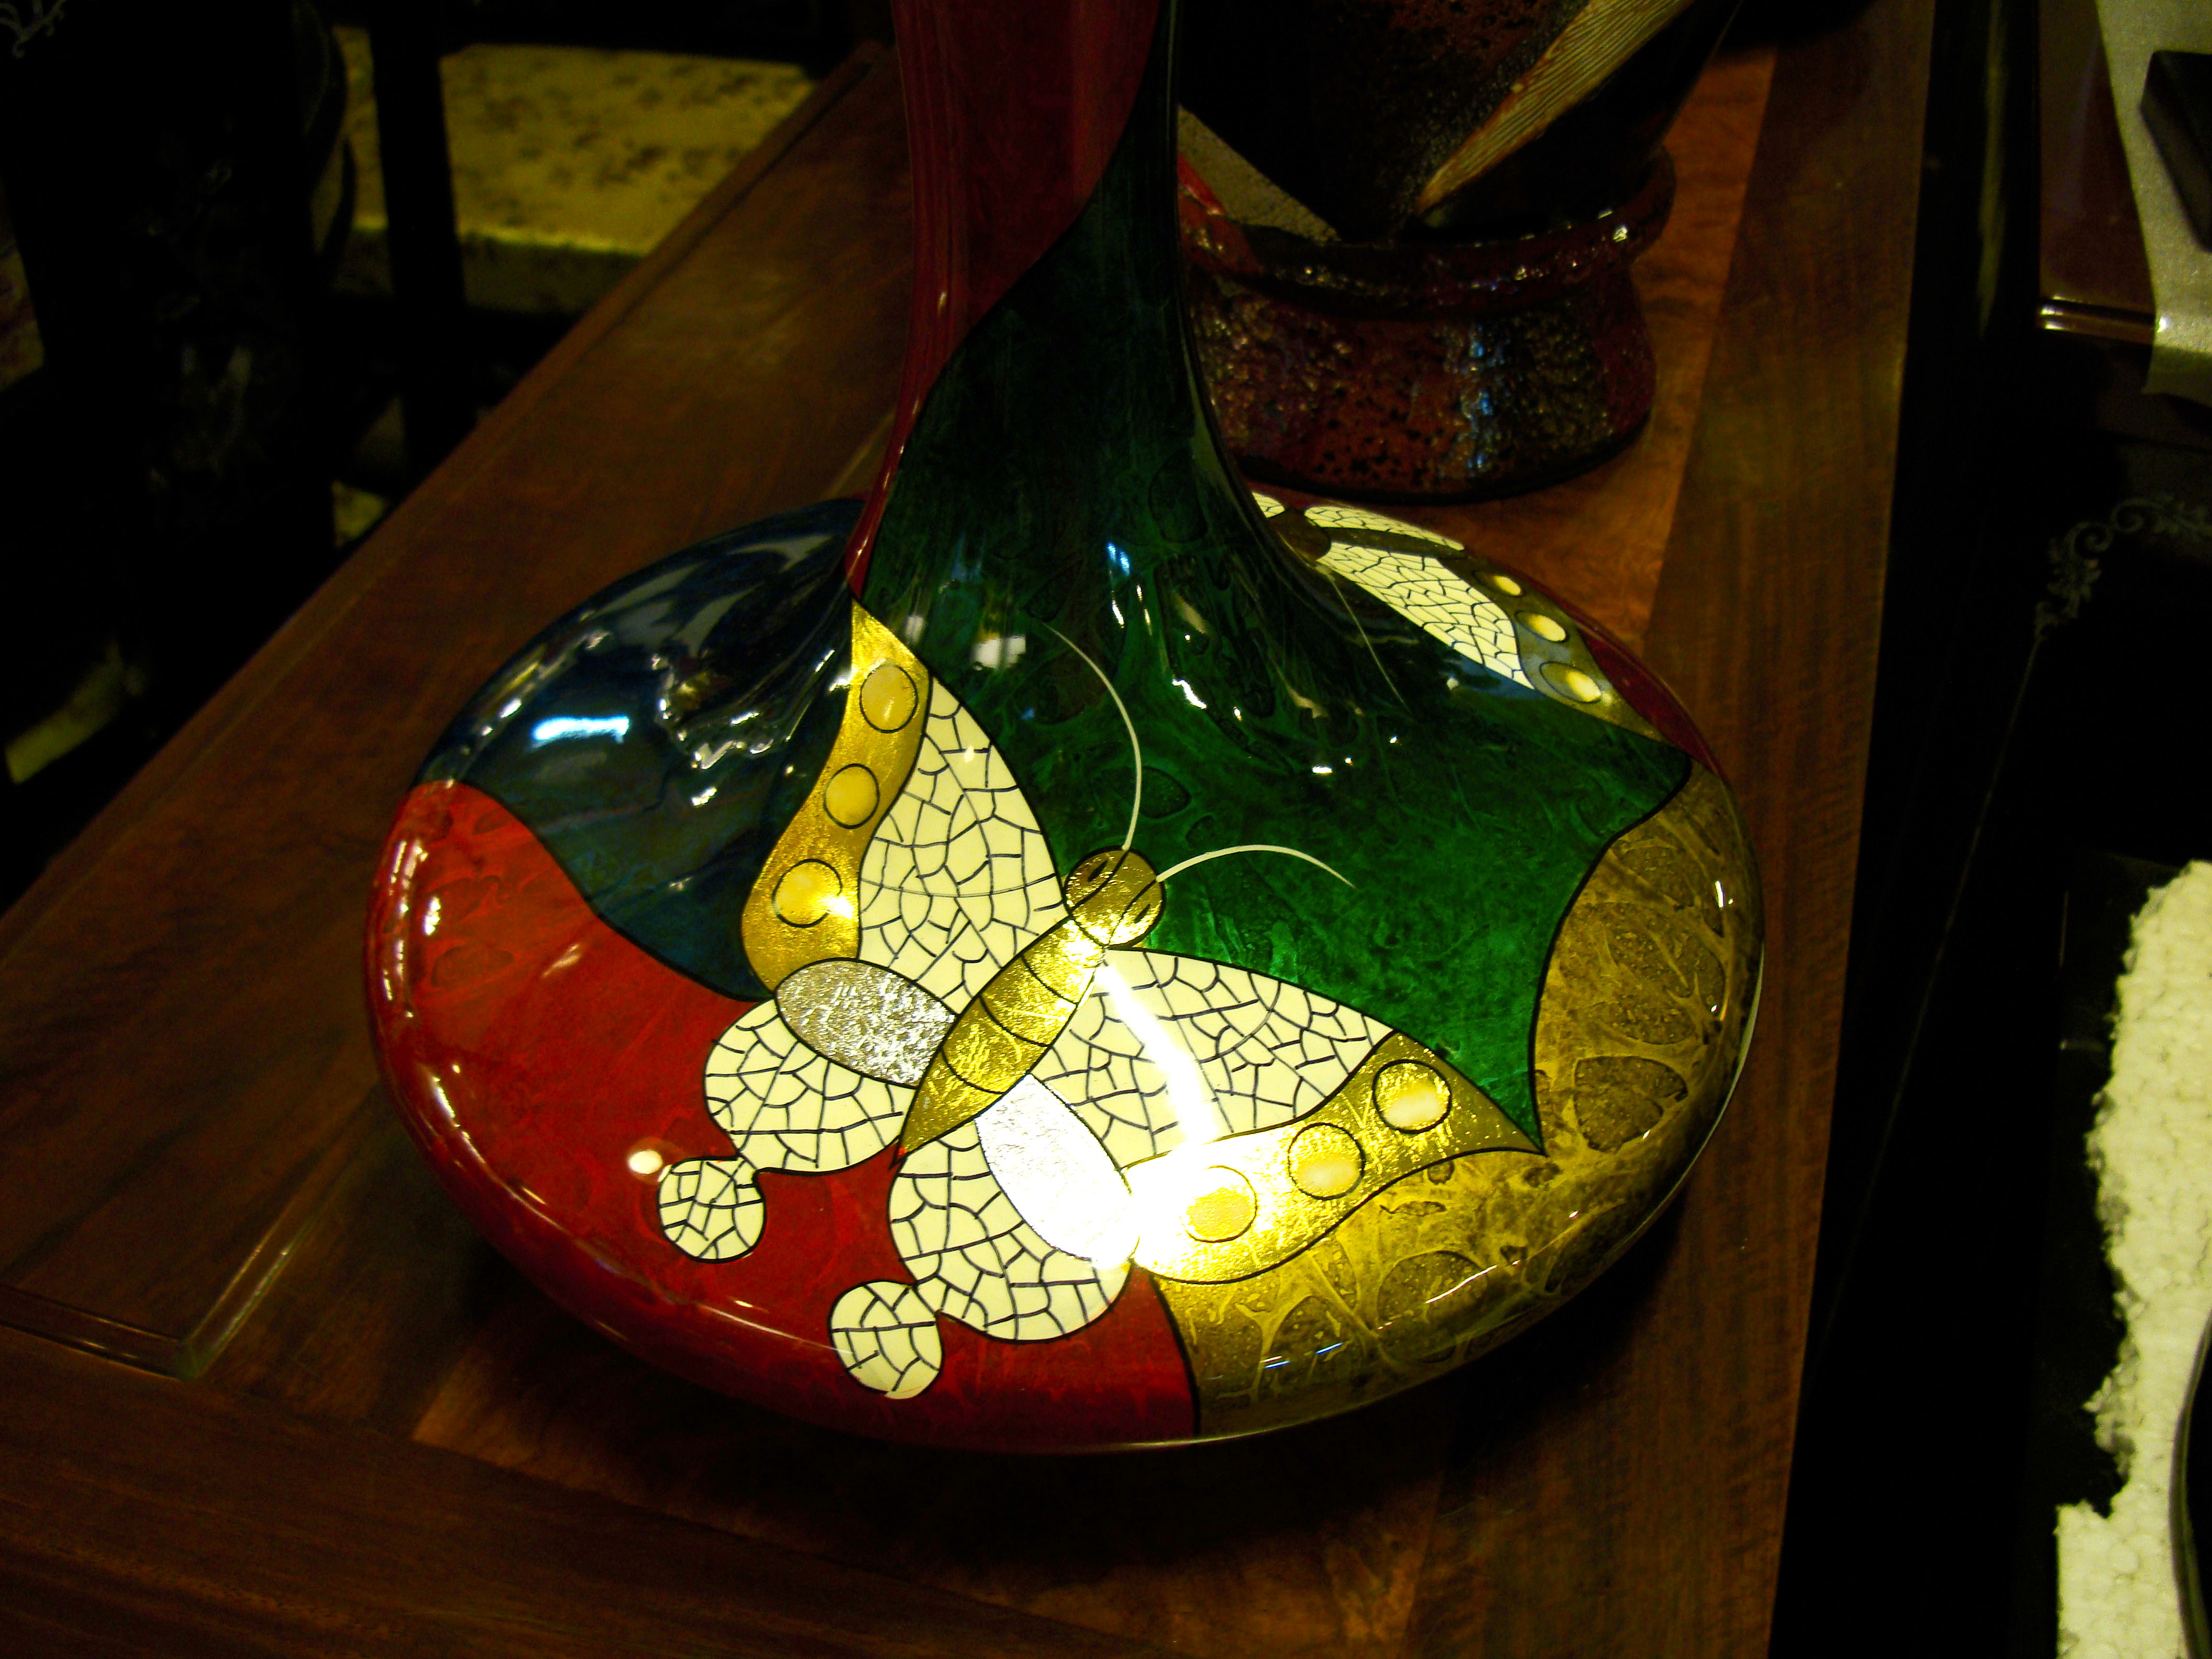 Vietnamese Lacquerware Vases Tay Son District 3 HCMC 2009 09